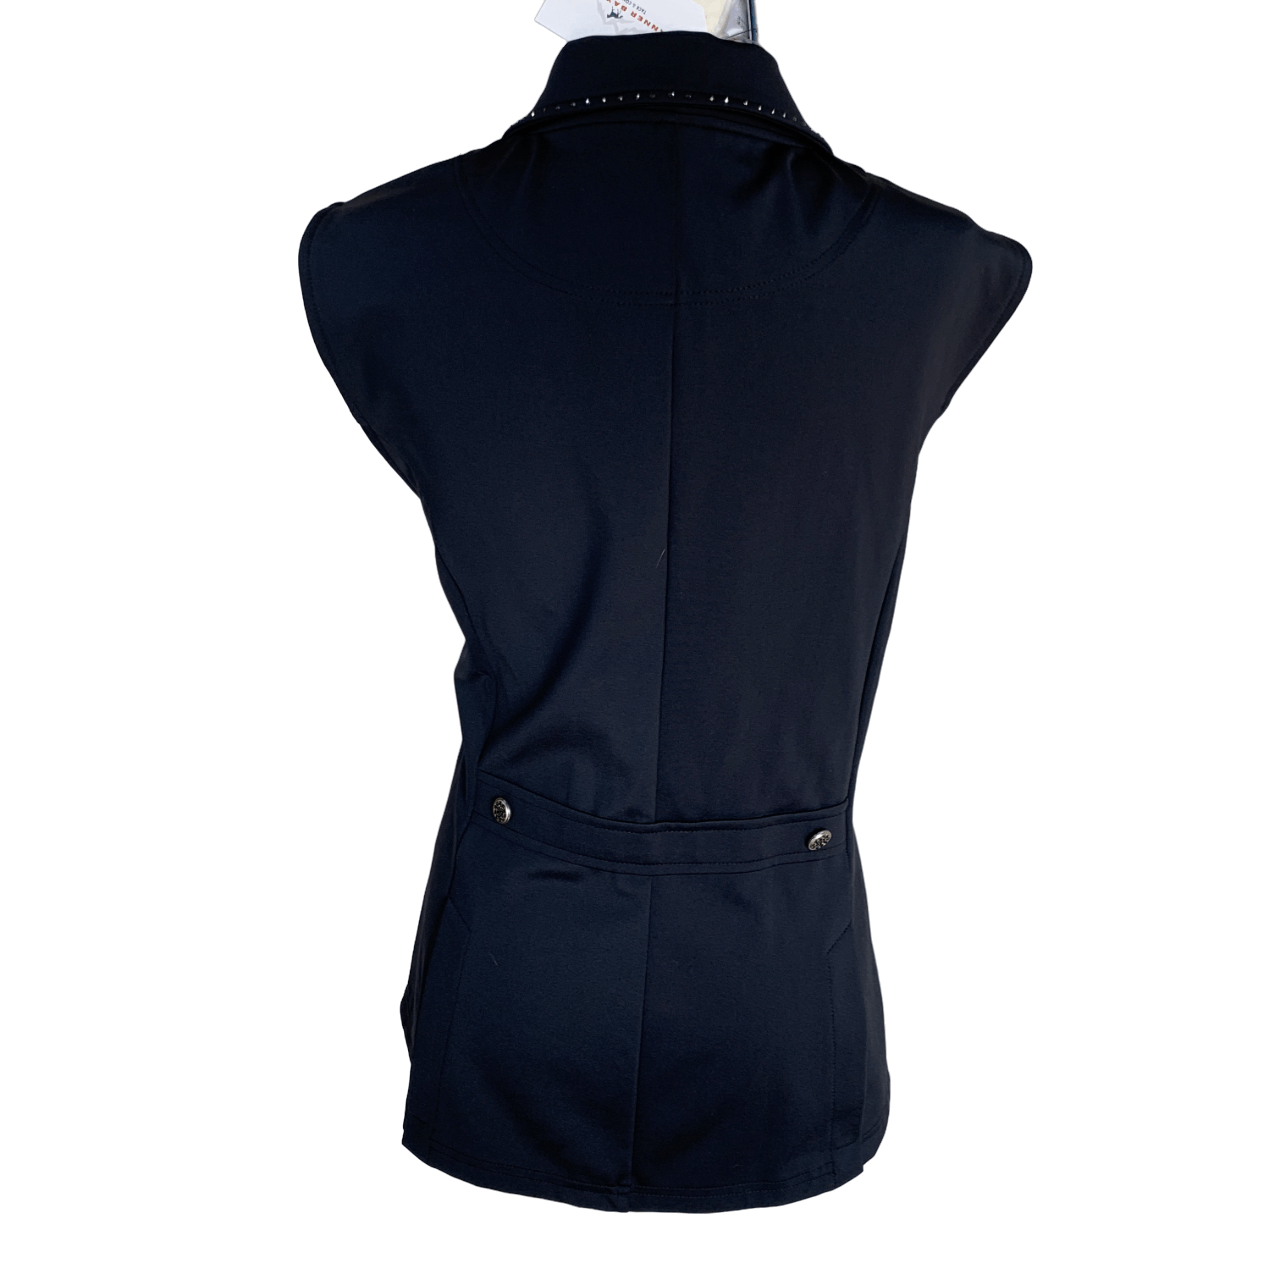 ROMFH Bling Dressage Vest in Black - Woman's 14